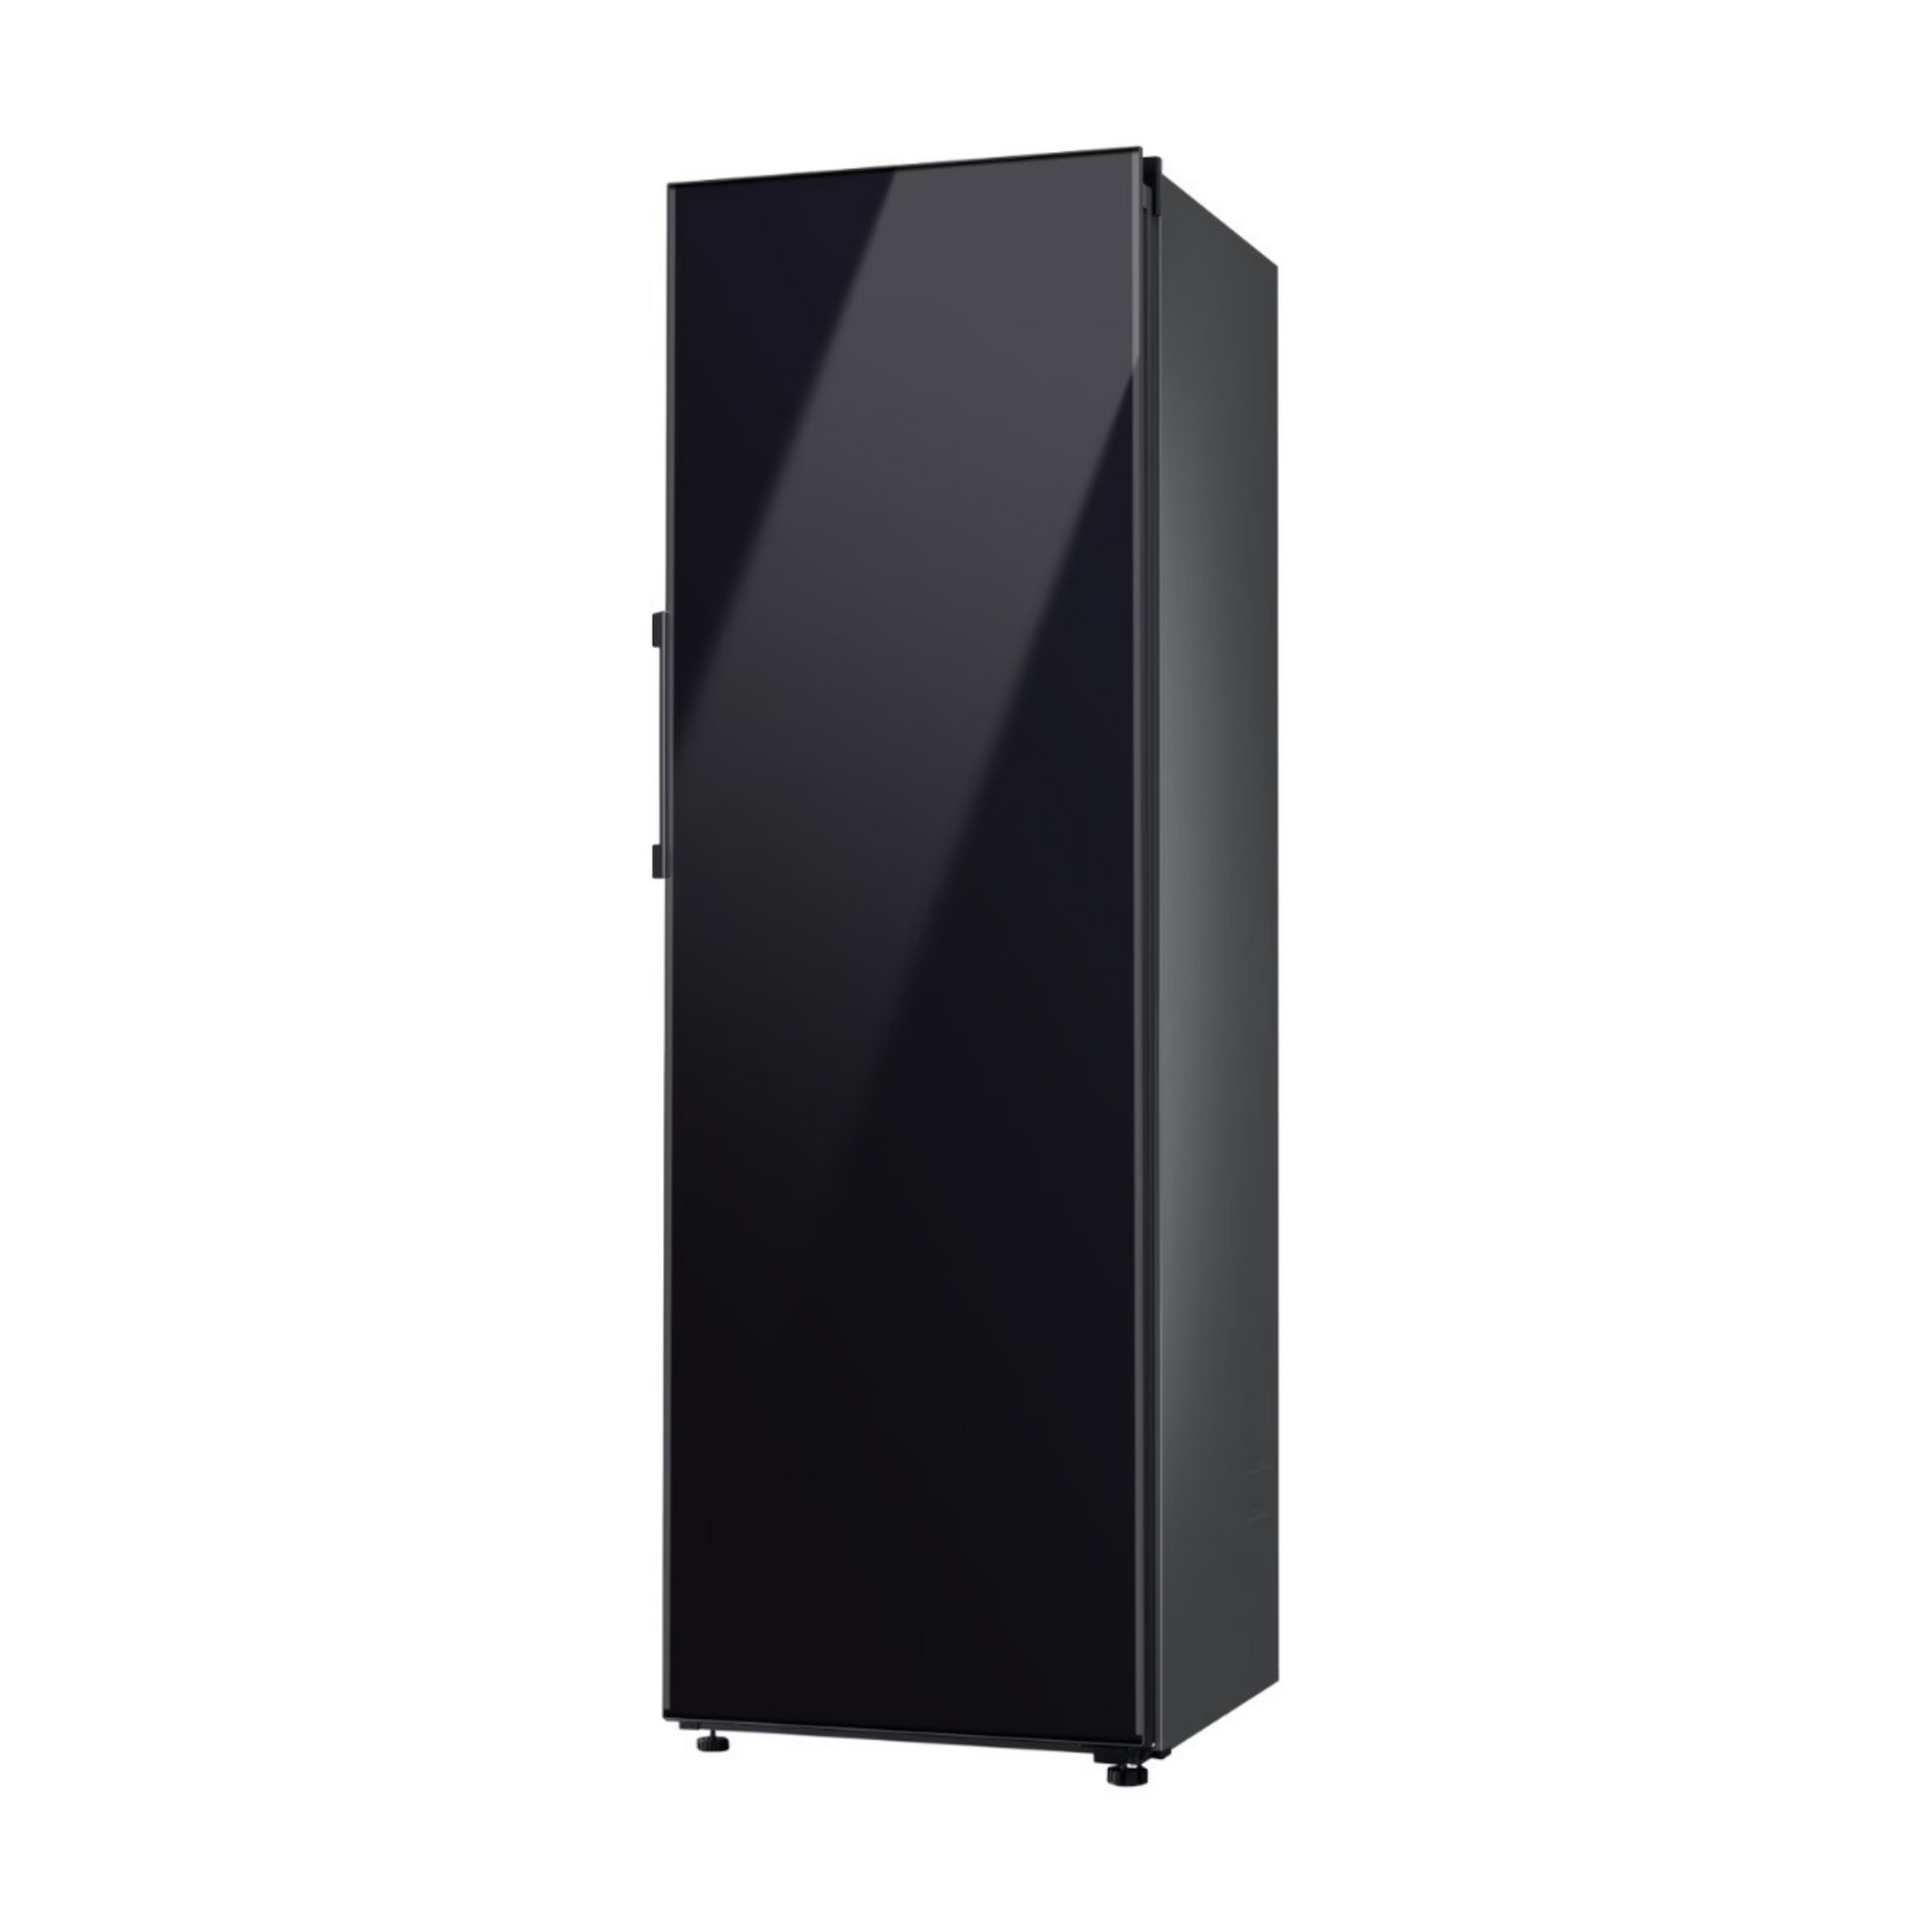 Samsung 387L Refrigerator, RR39A746322